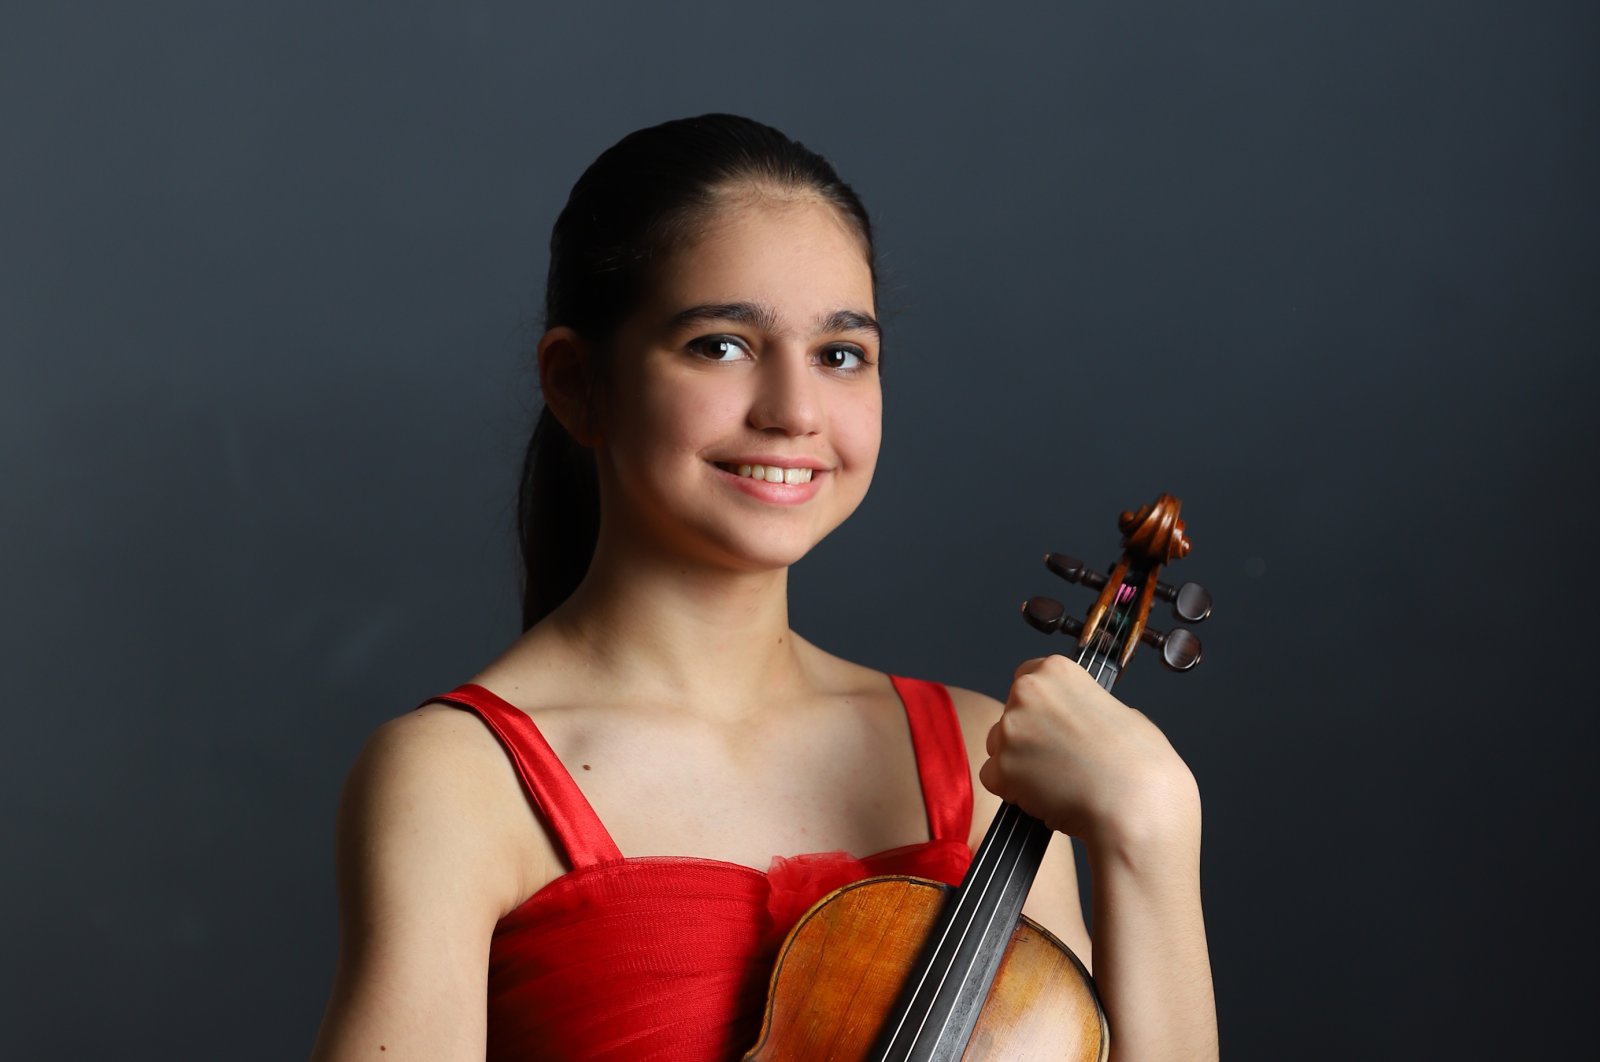 Naz Irem Türkmen started her musical journey when she was 7.